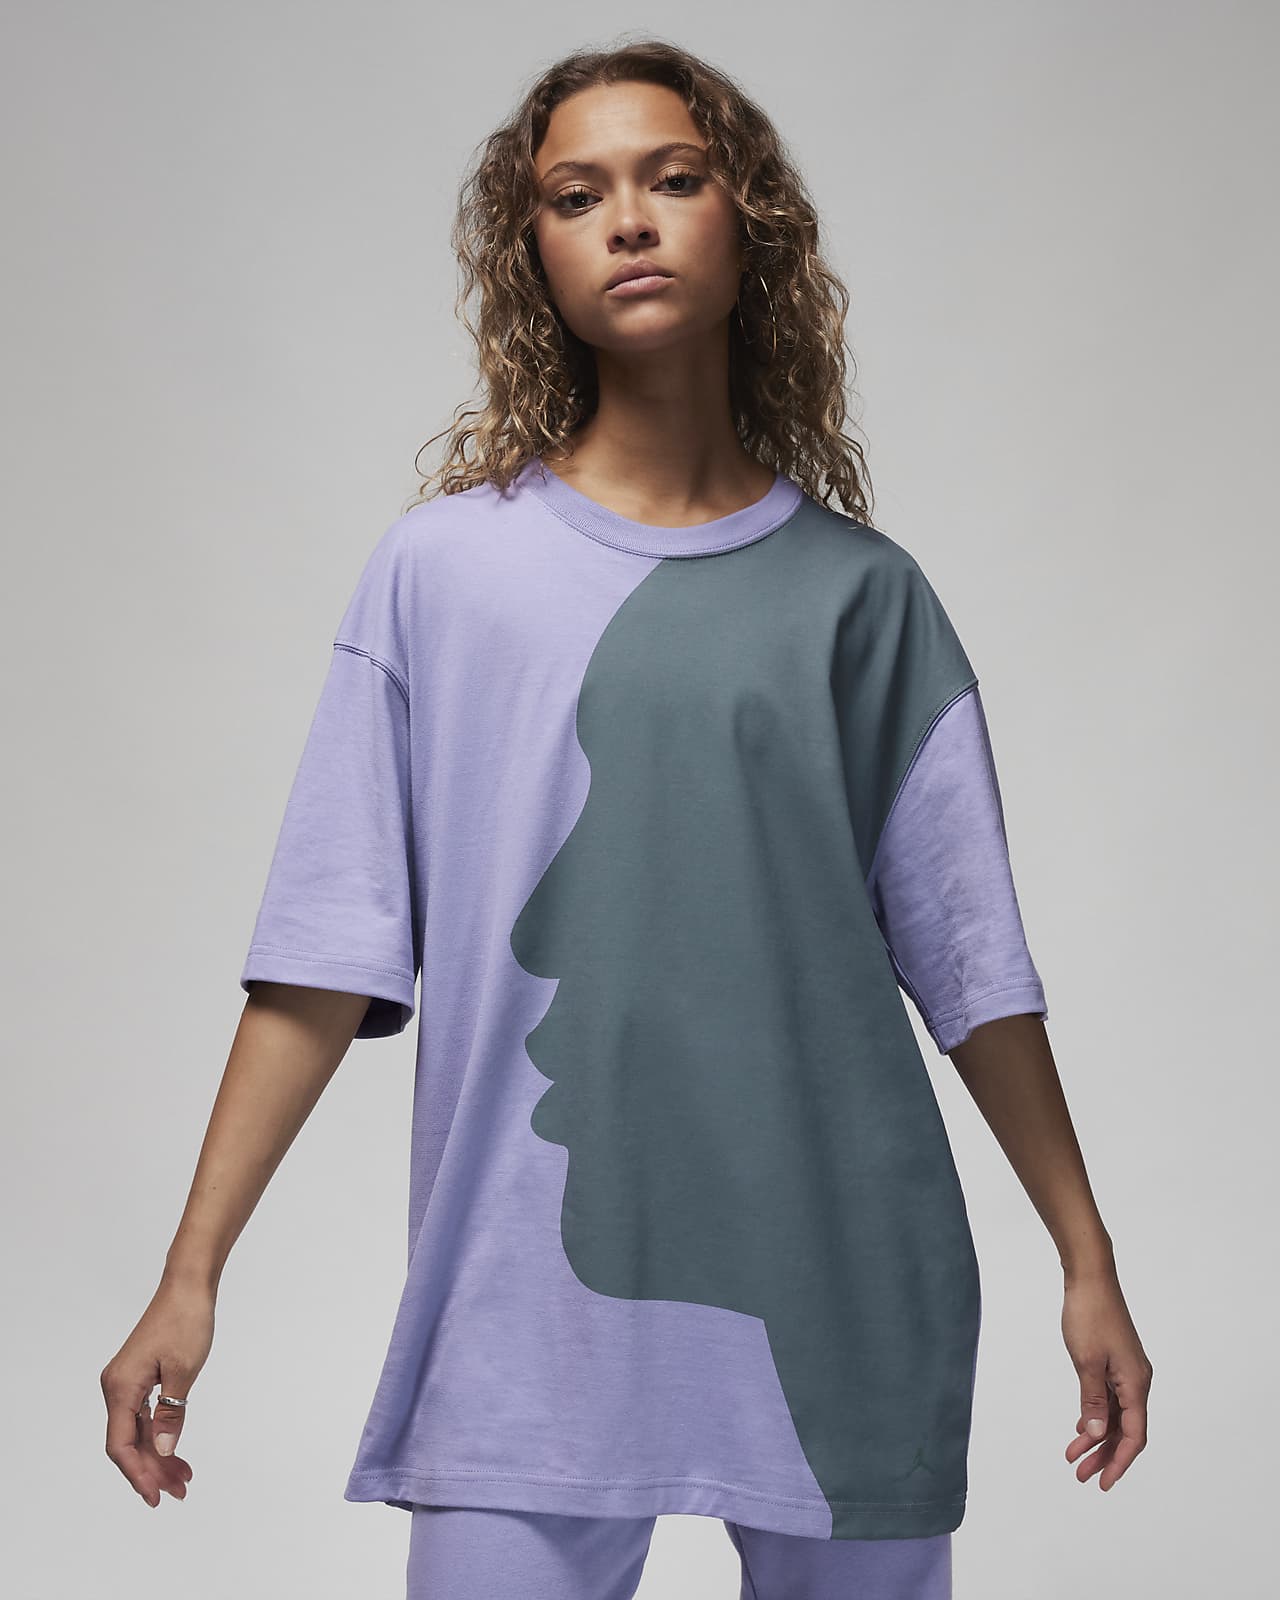 Jordan Oversize-T-Shirt mit Grafik für Damen